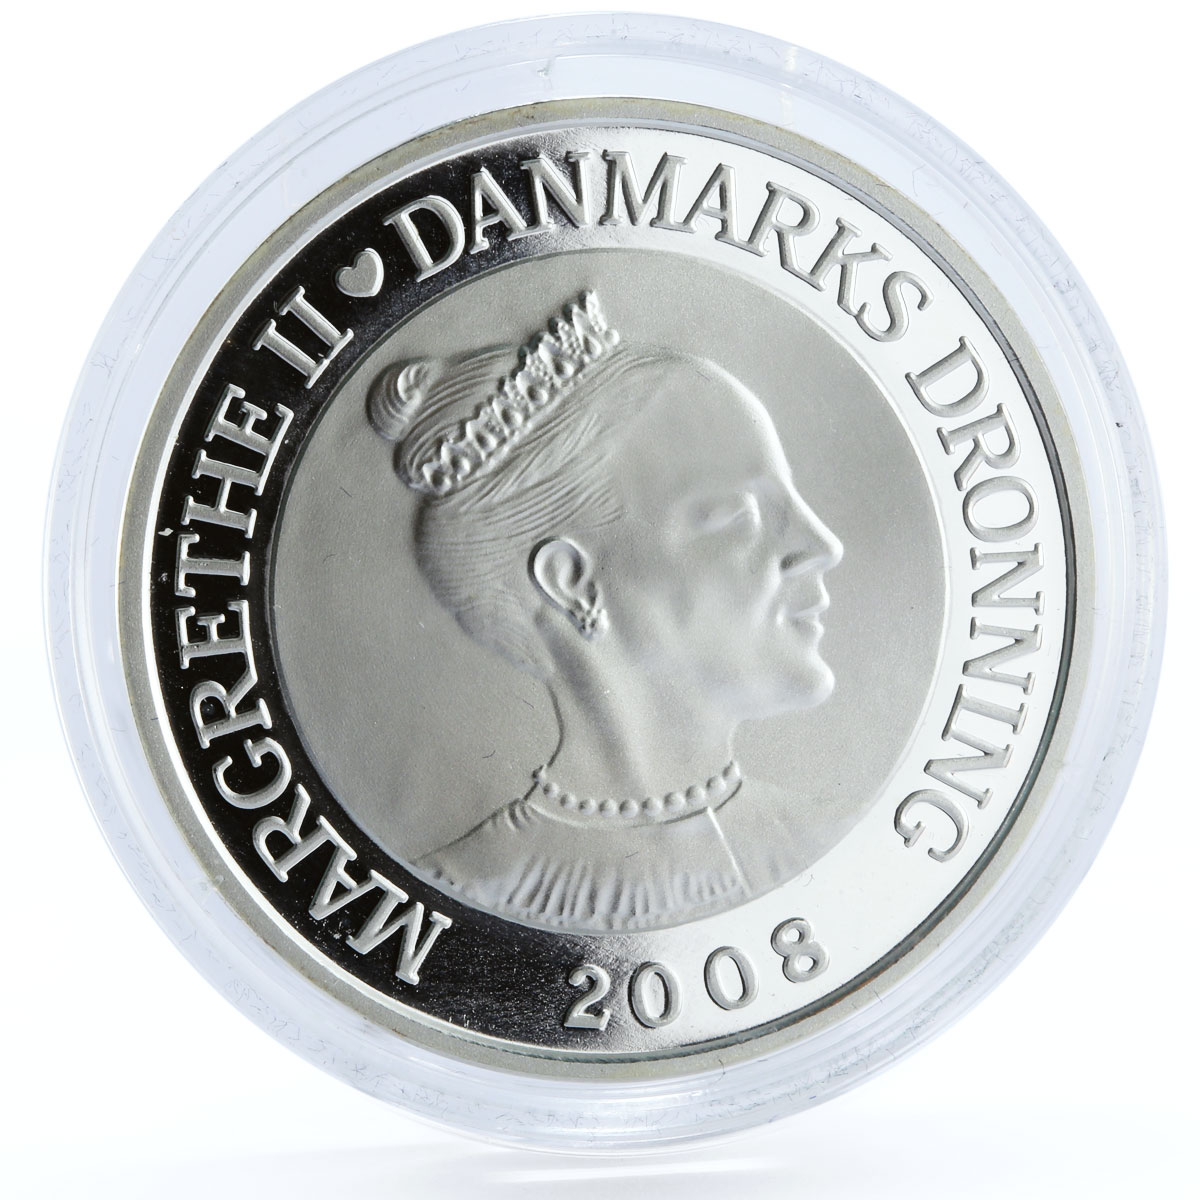 Denmark 500 kroner The Royal Yacht Dannebrog Ship Clipper proof silver coin 2008